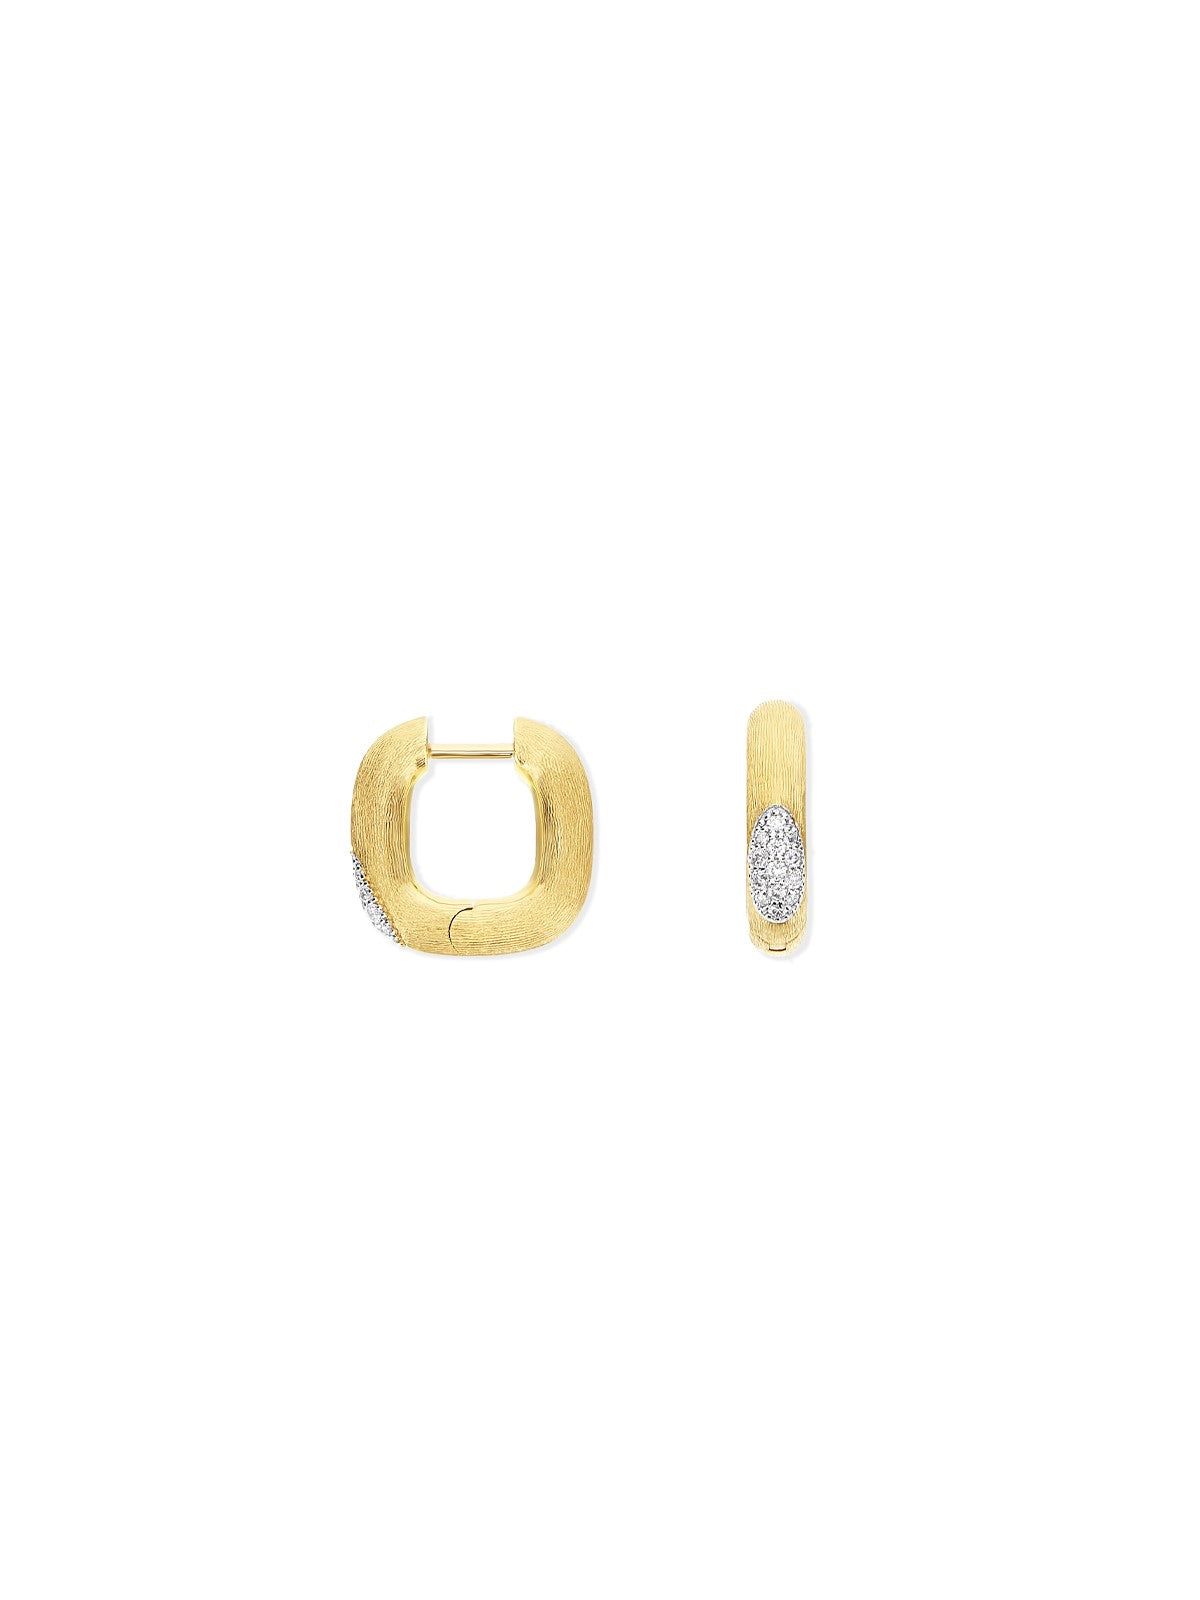 "Libera" small squared gold earrings